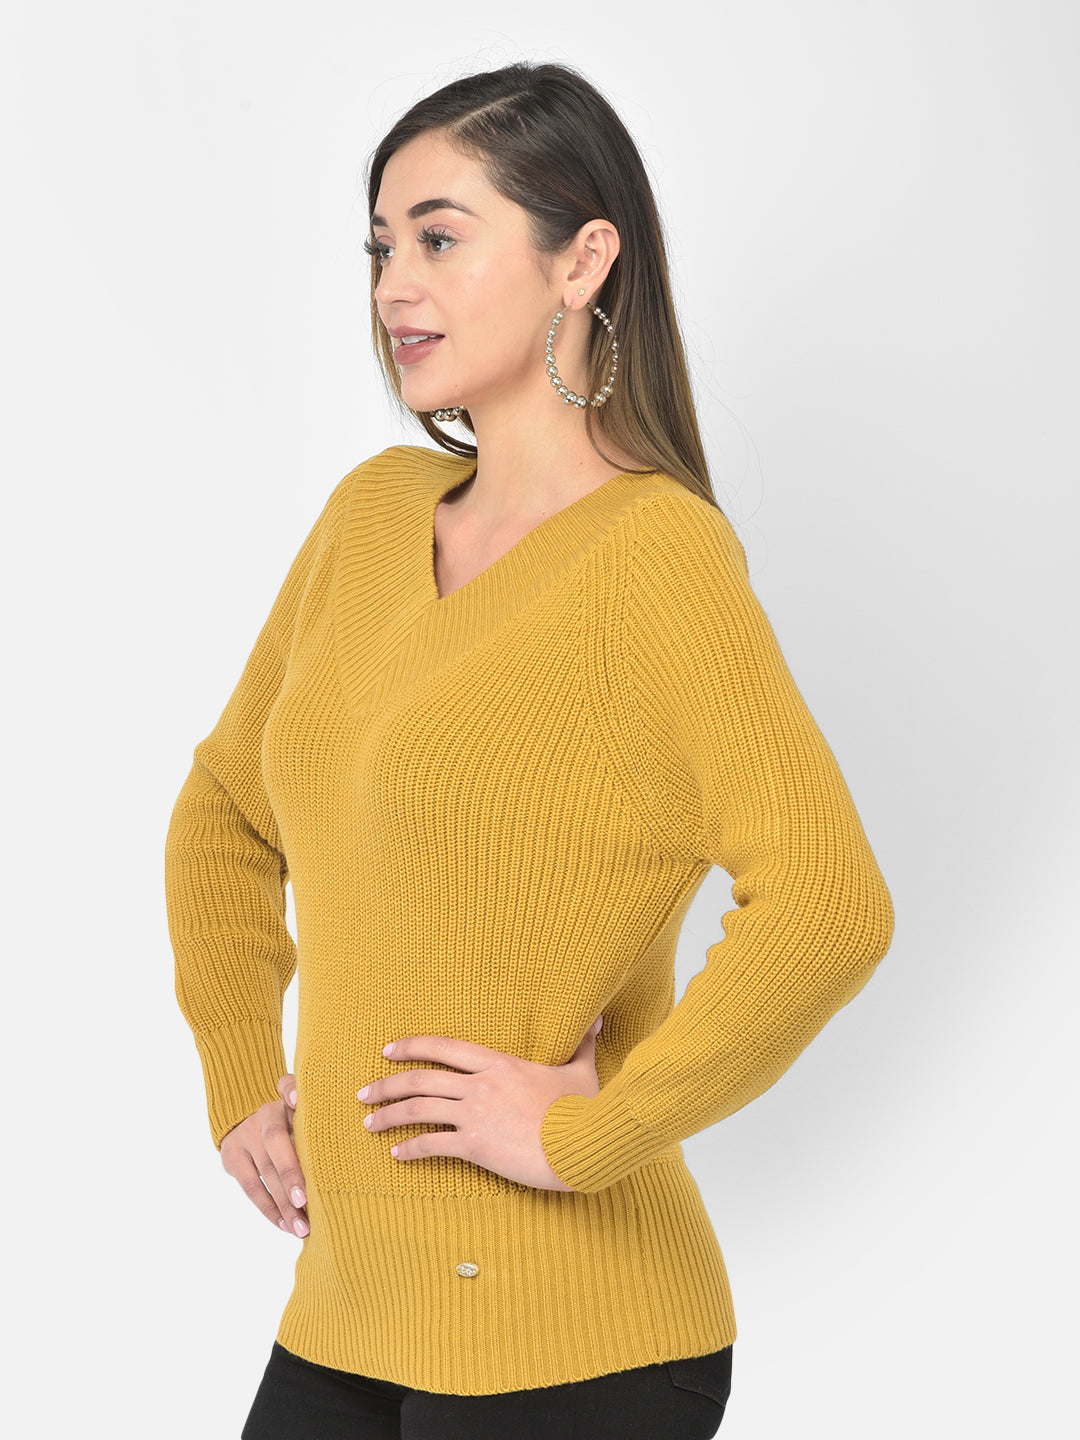 Long Sleeve Pullover Sweatertop